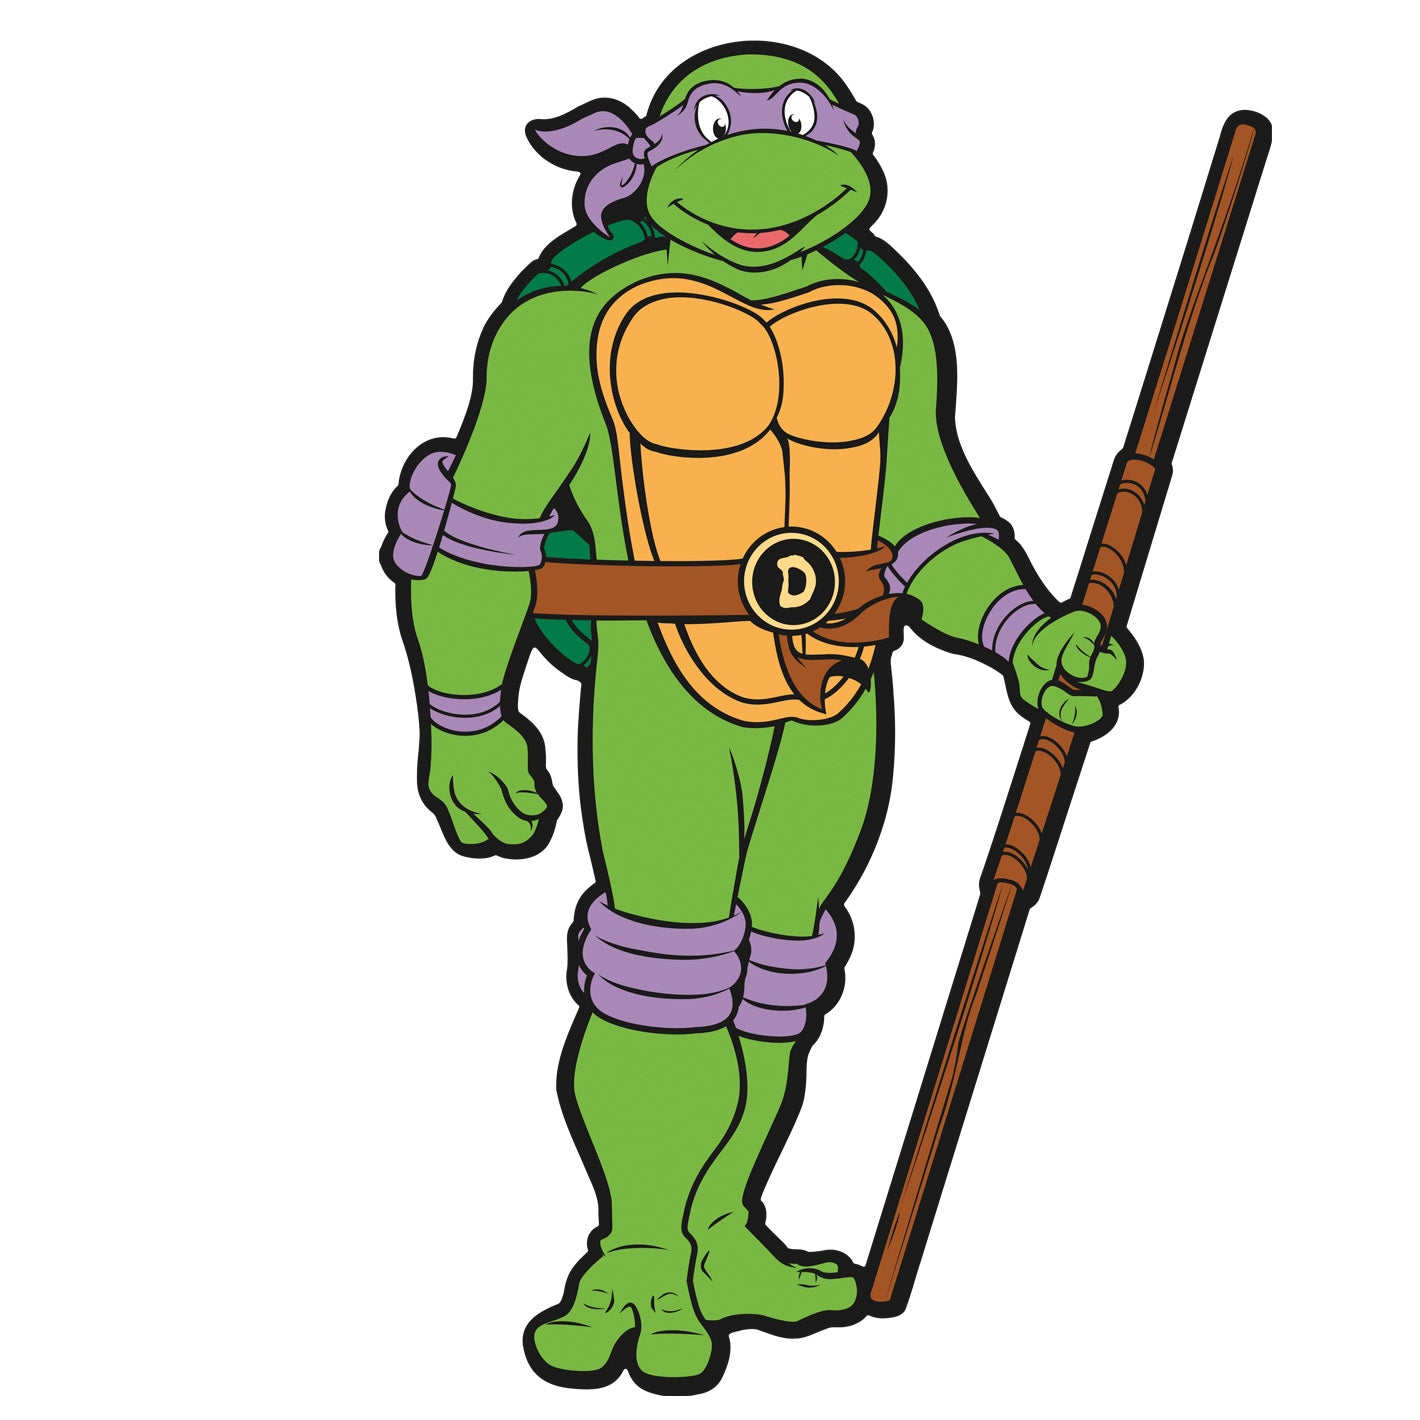 Teenage Mutant Ninja Turtles 12” Original Classic Michelangelo Giant Figure